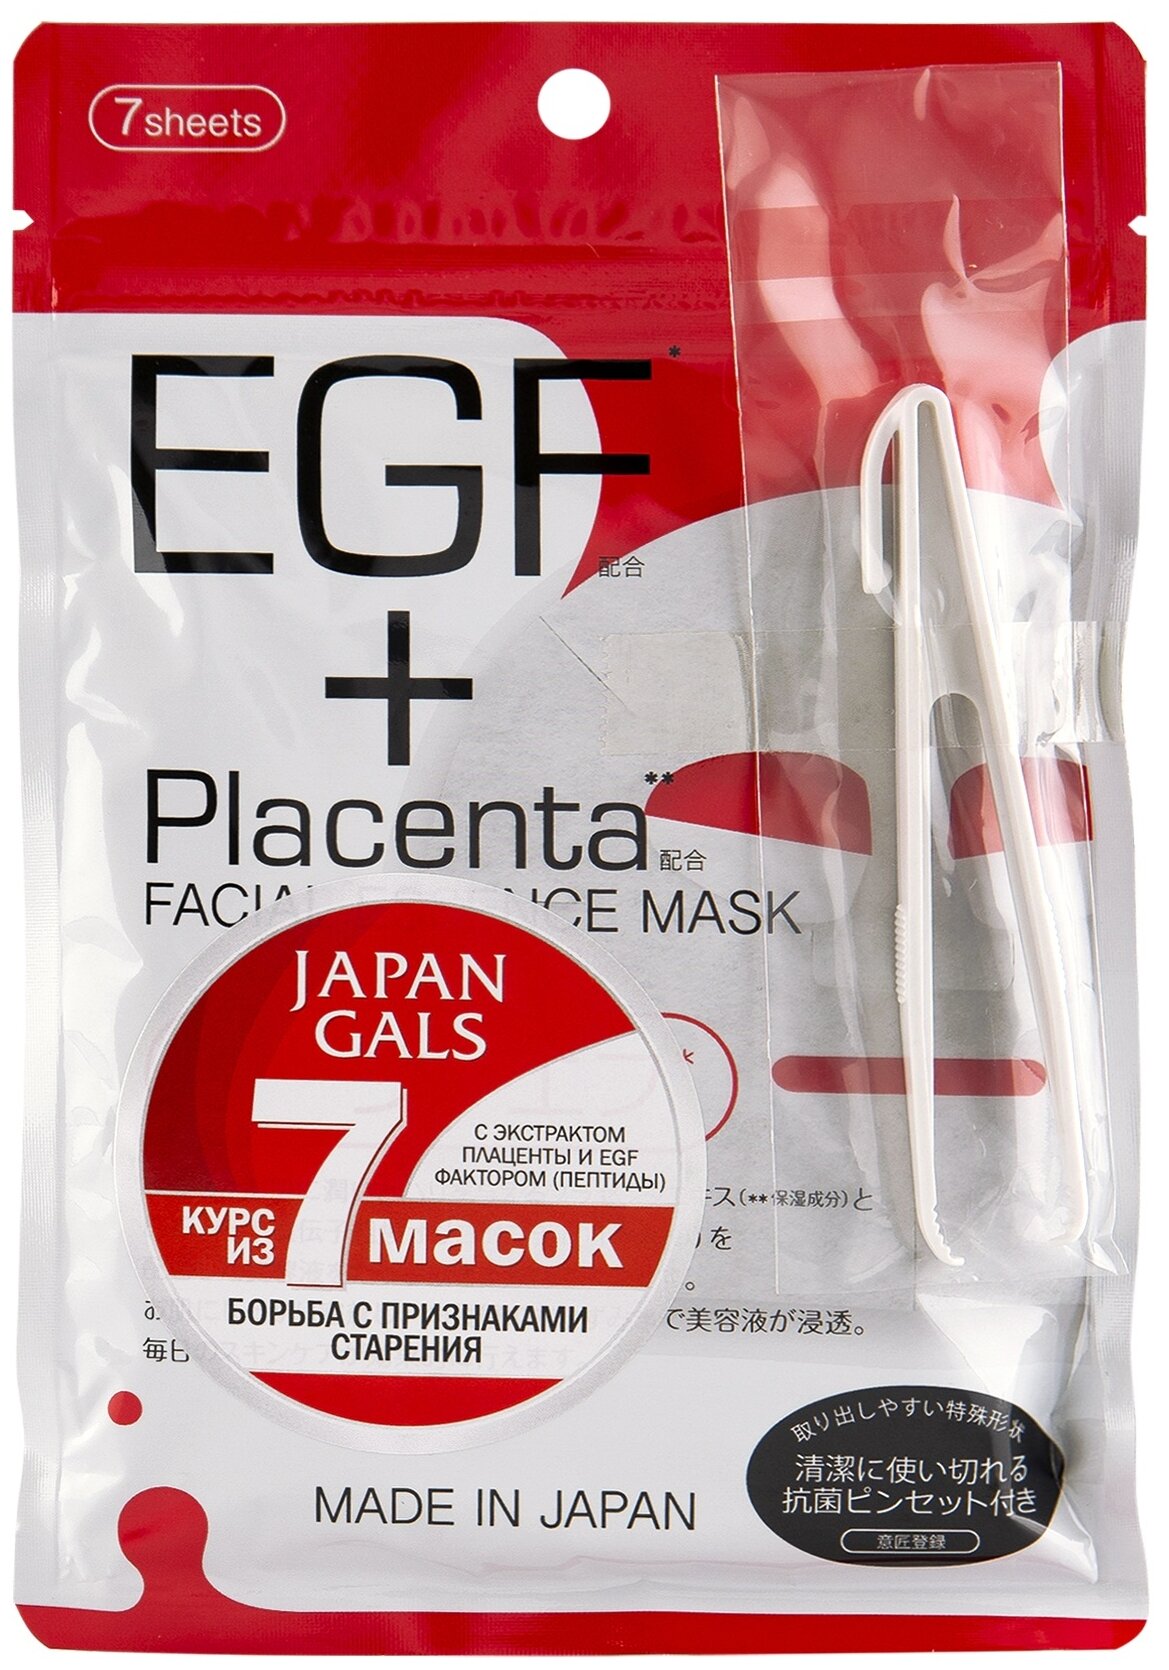 Japan Gals маска Placenta + EGF фактор